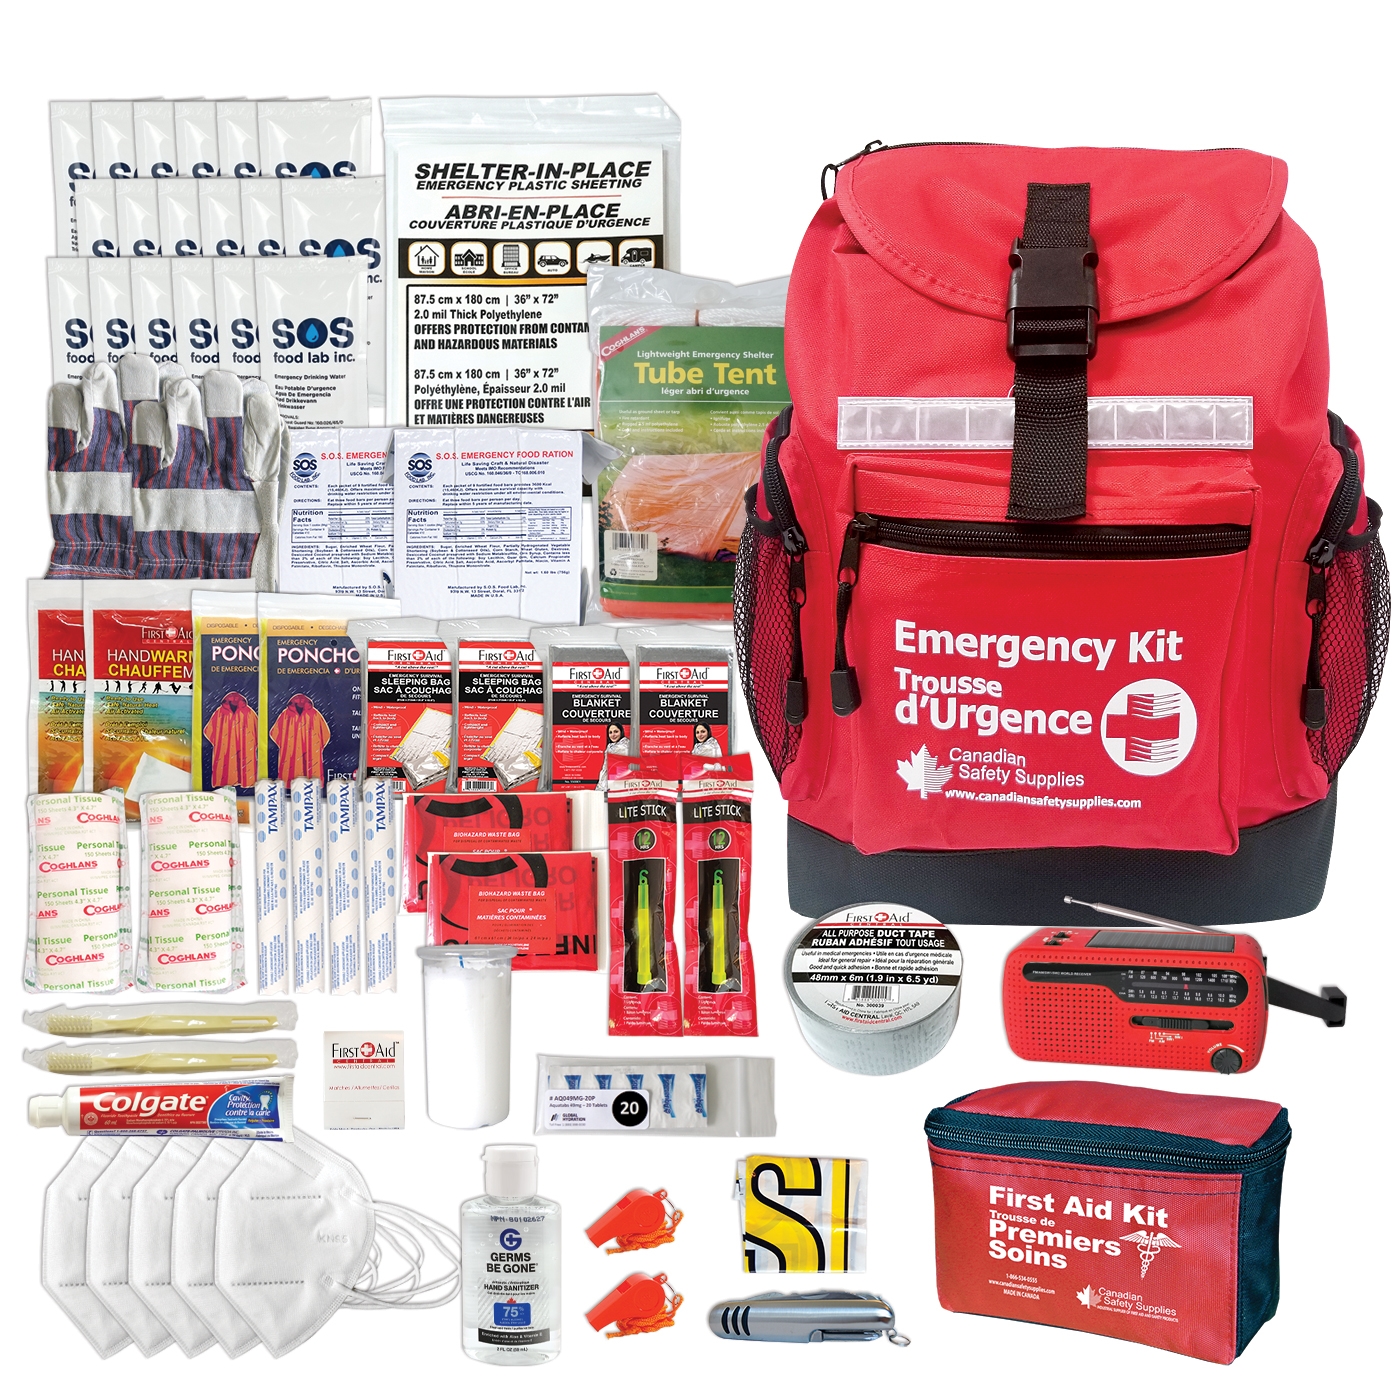 72 hour emergency kit